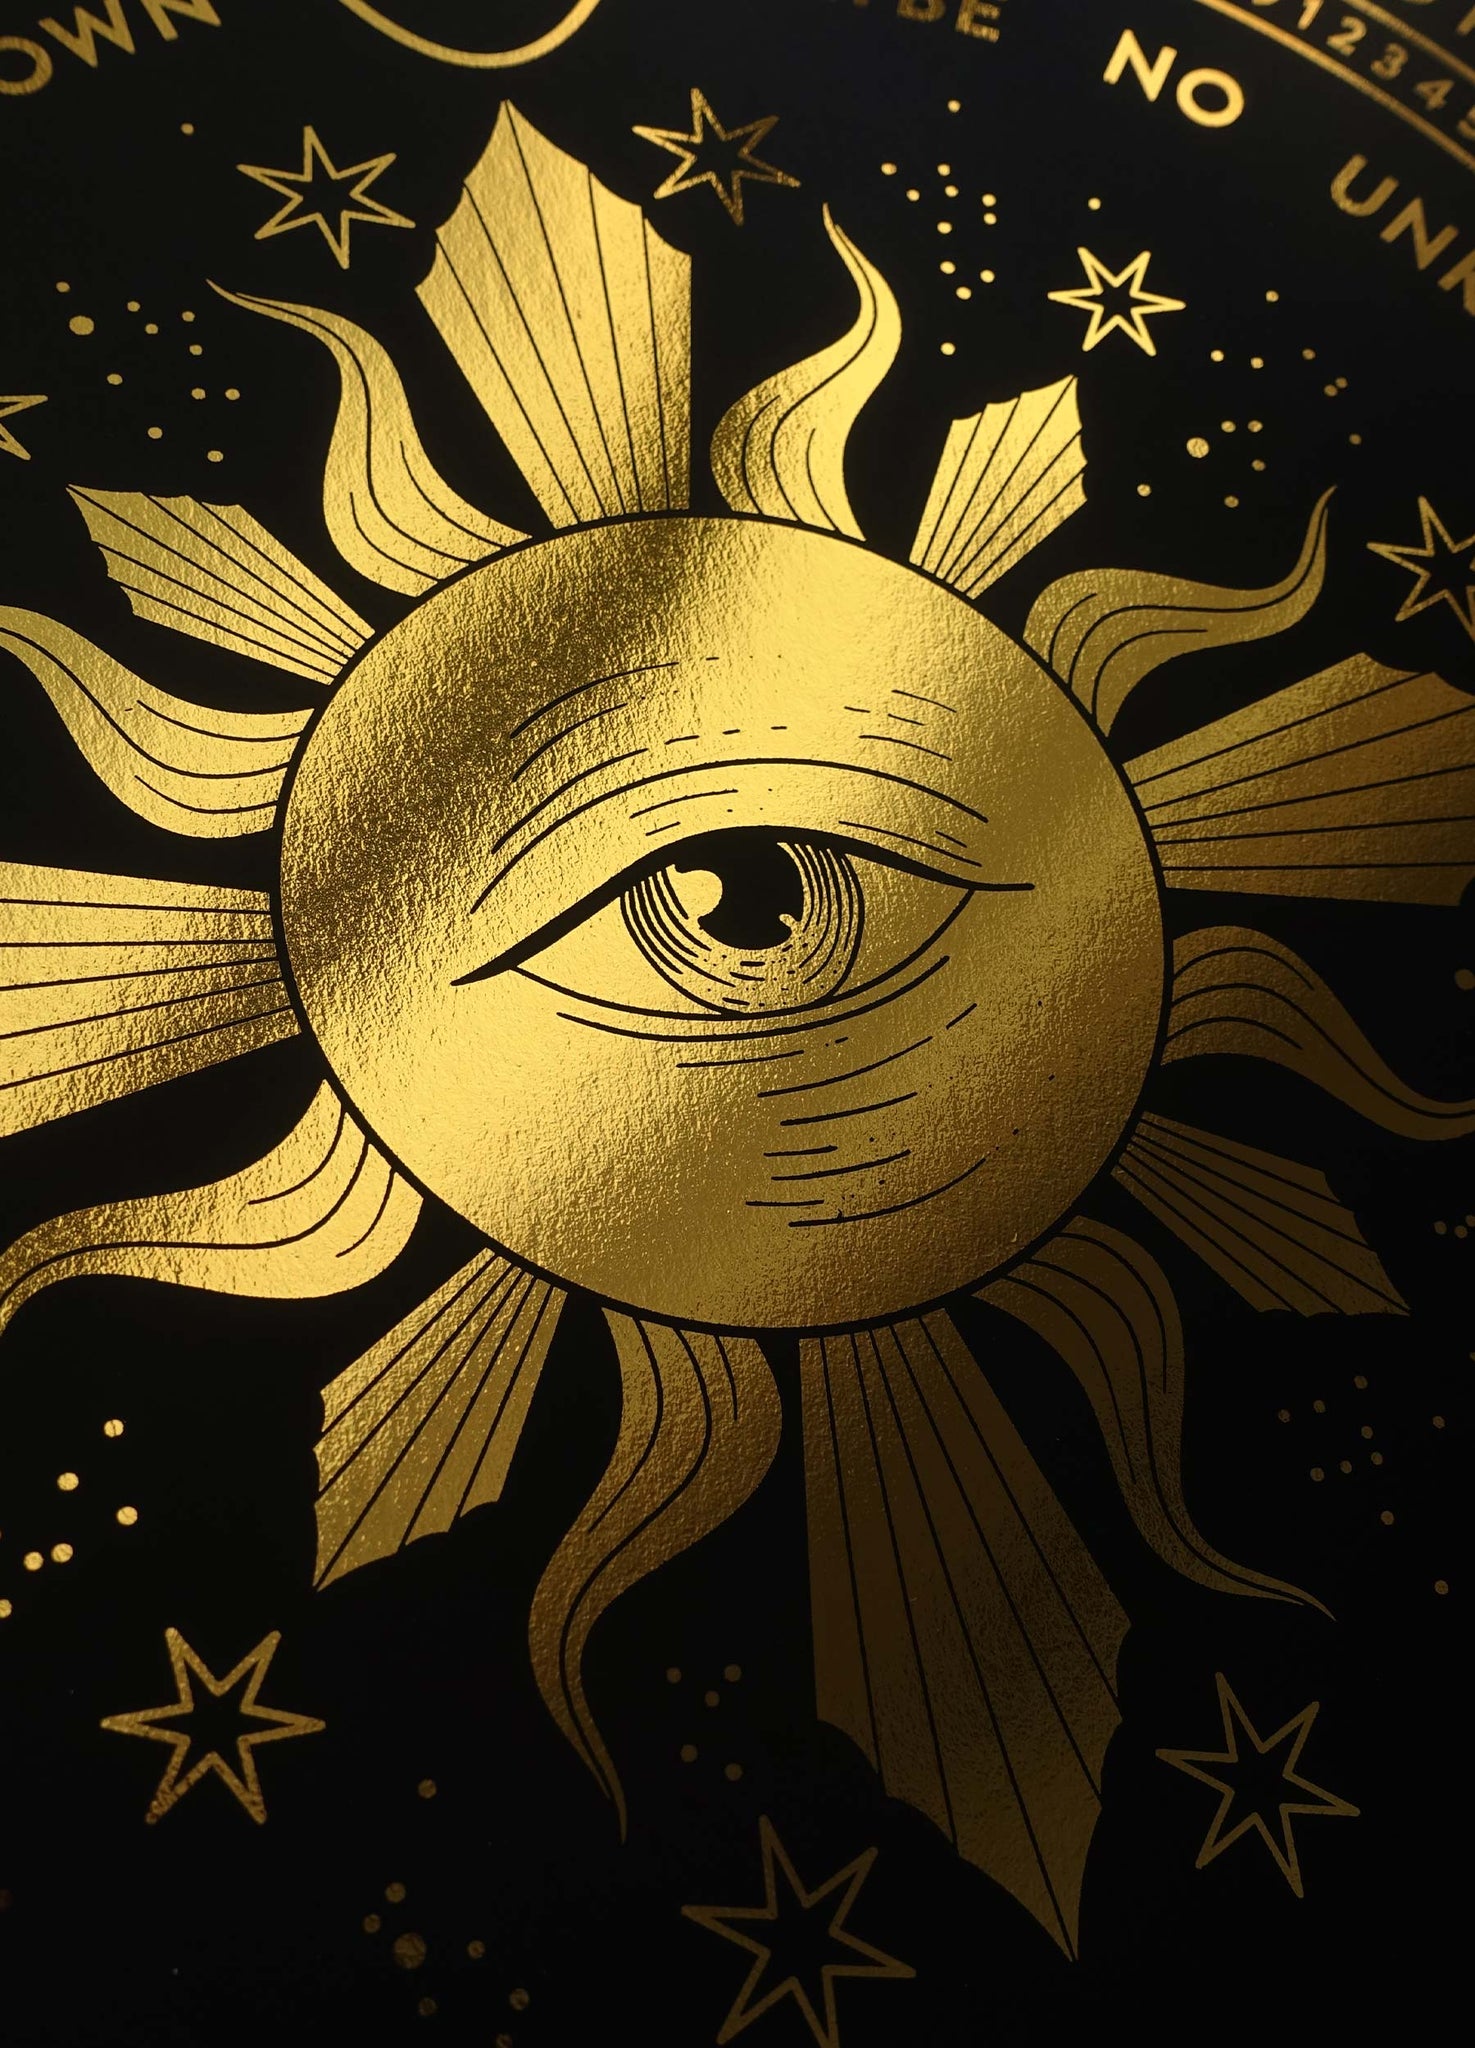 Fates' Wheel Eye gold foil art print on black paper by Cocorrina & Co